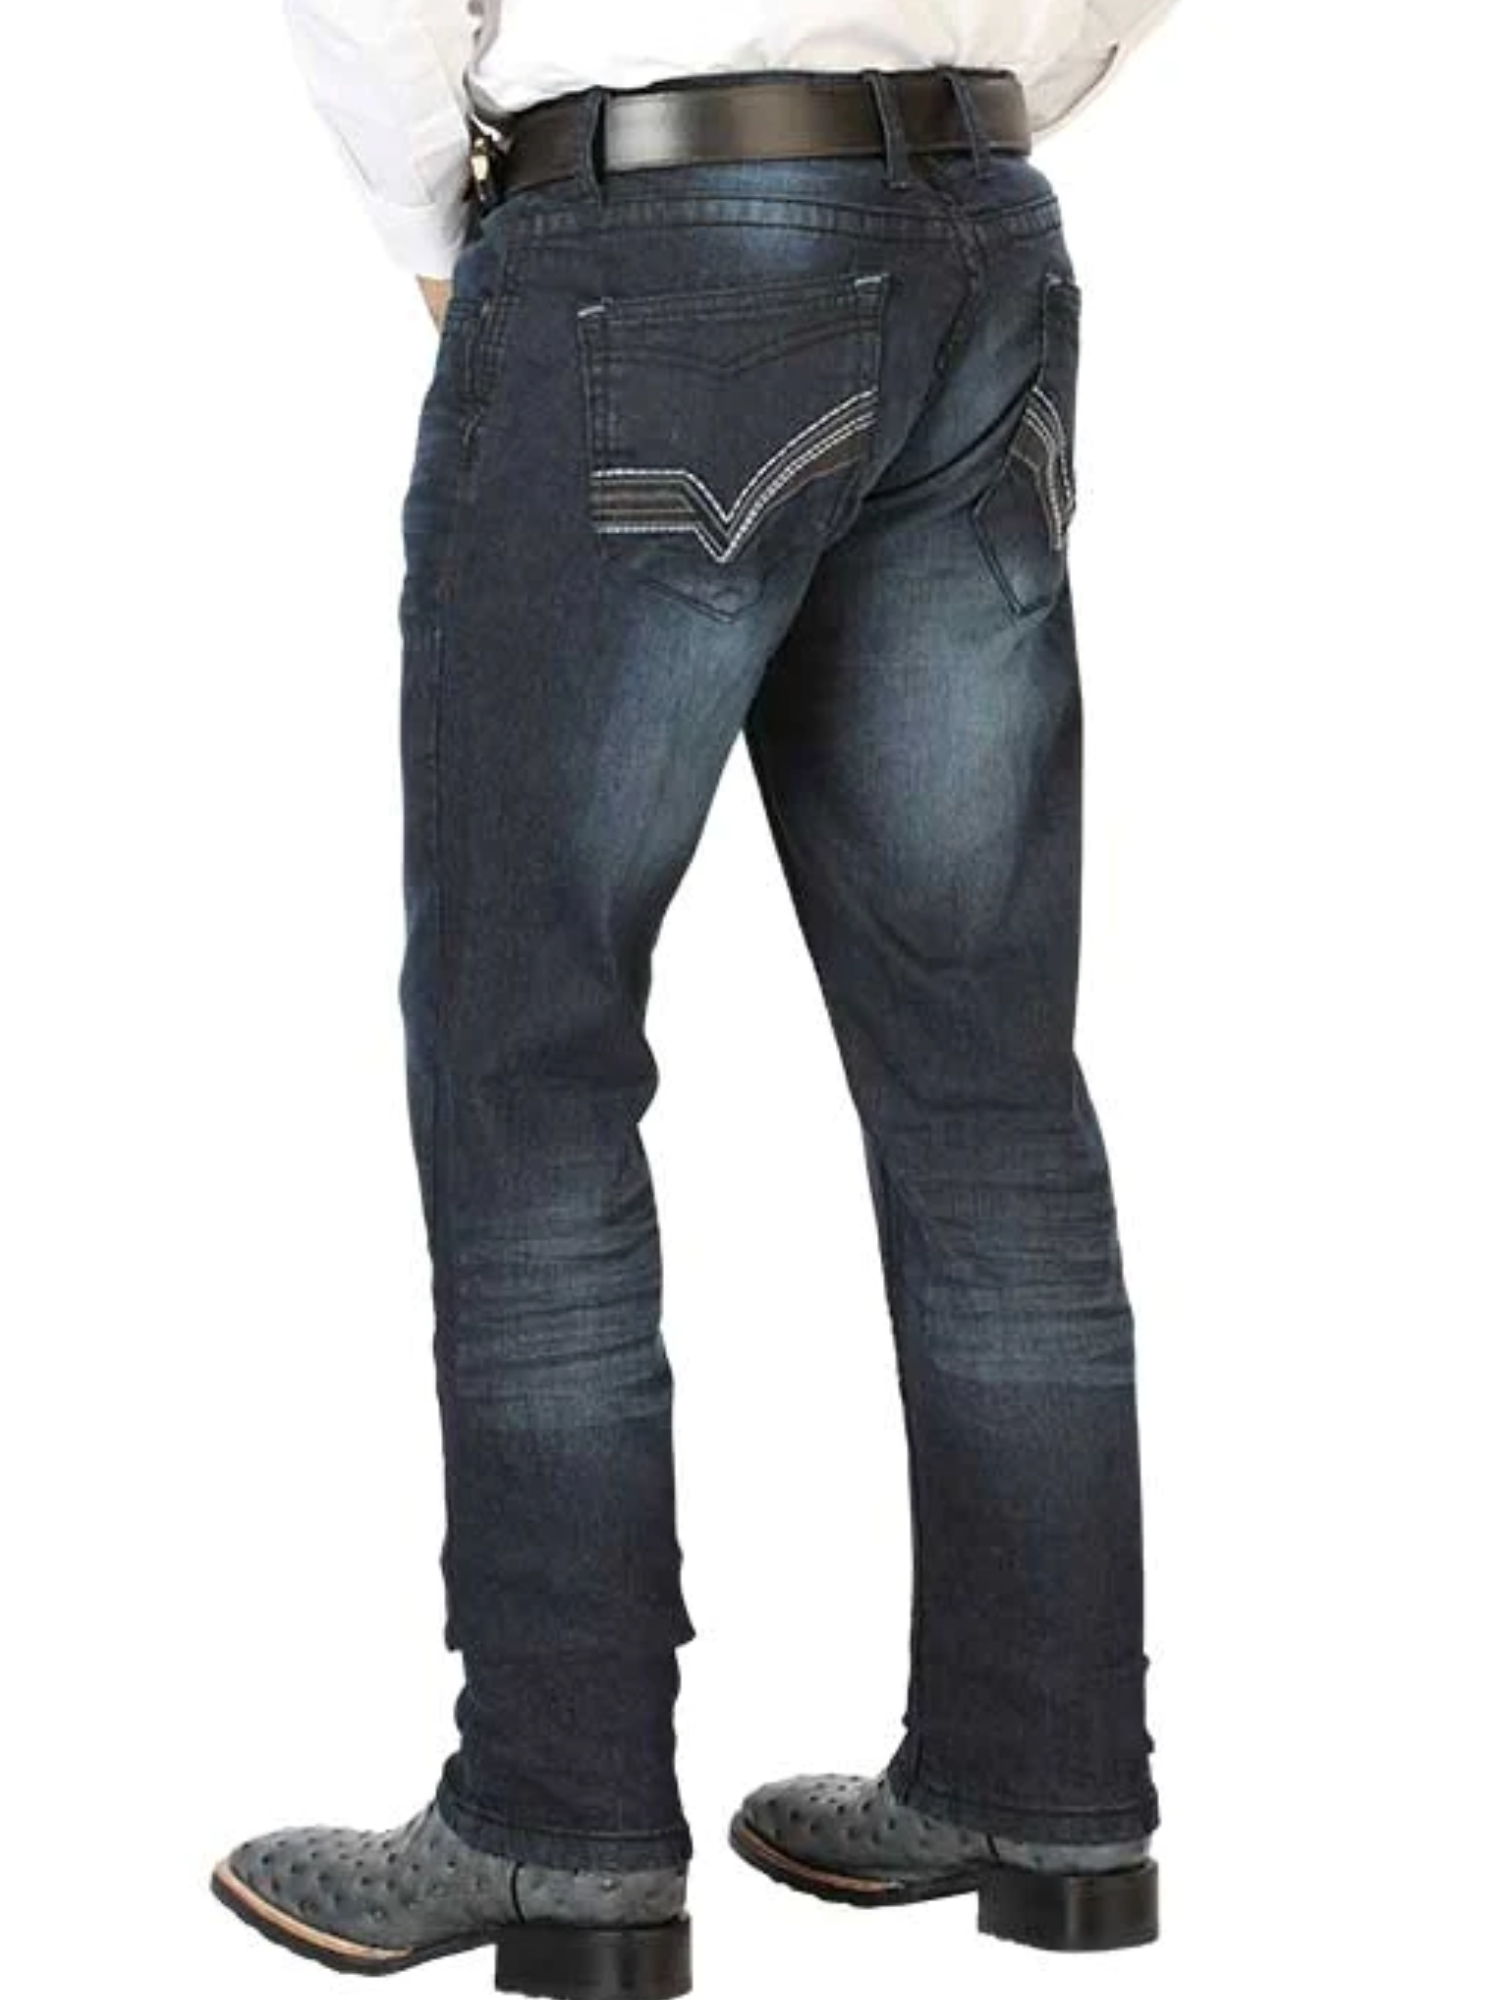 Pantalon De Mezclilla Casual Para Hombre 'El Norteño' *Azul Oscuro-126634*  - BELLEZA'S